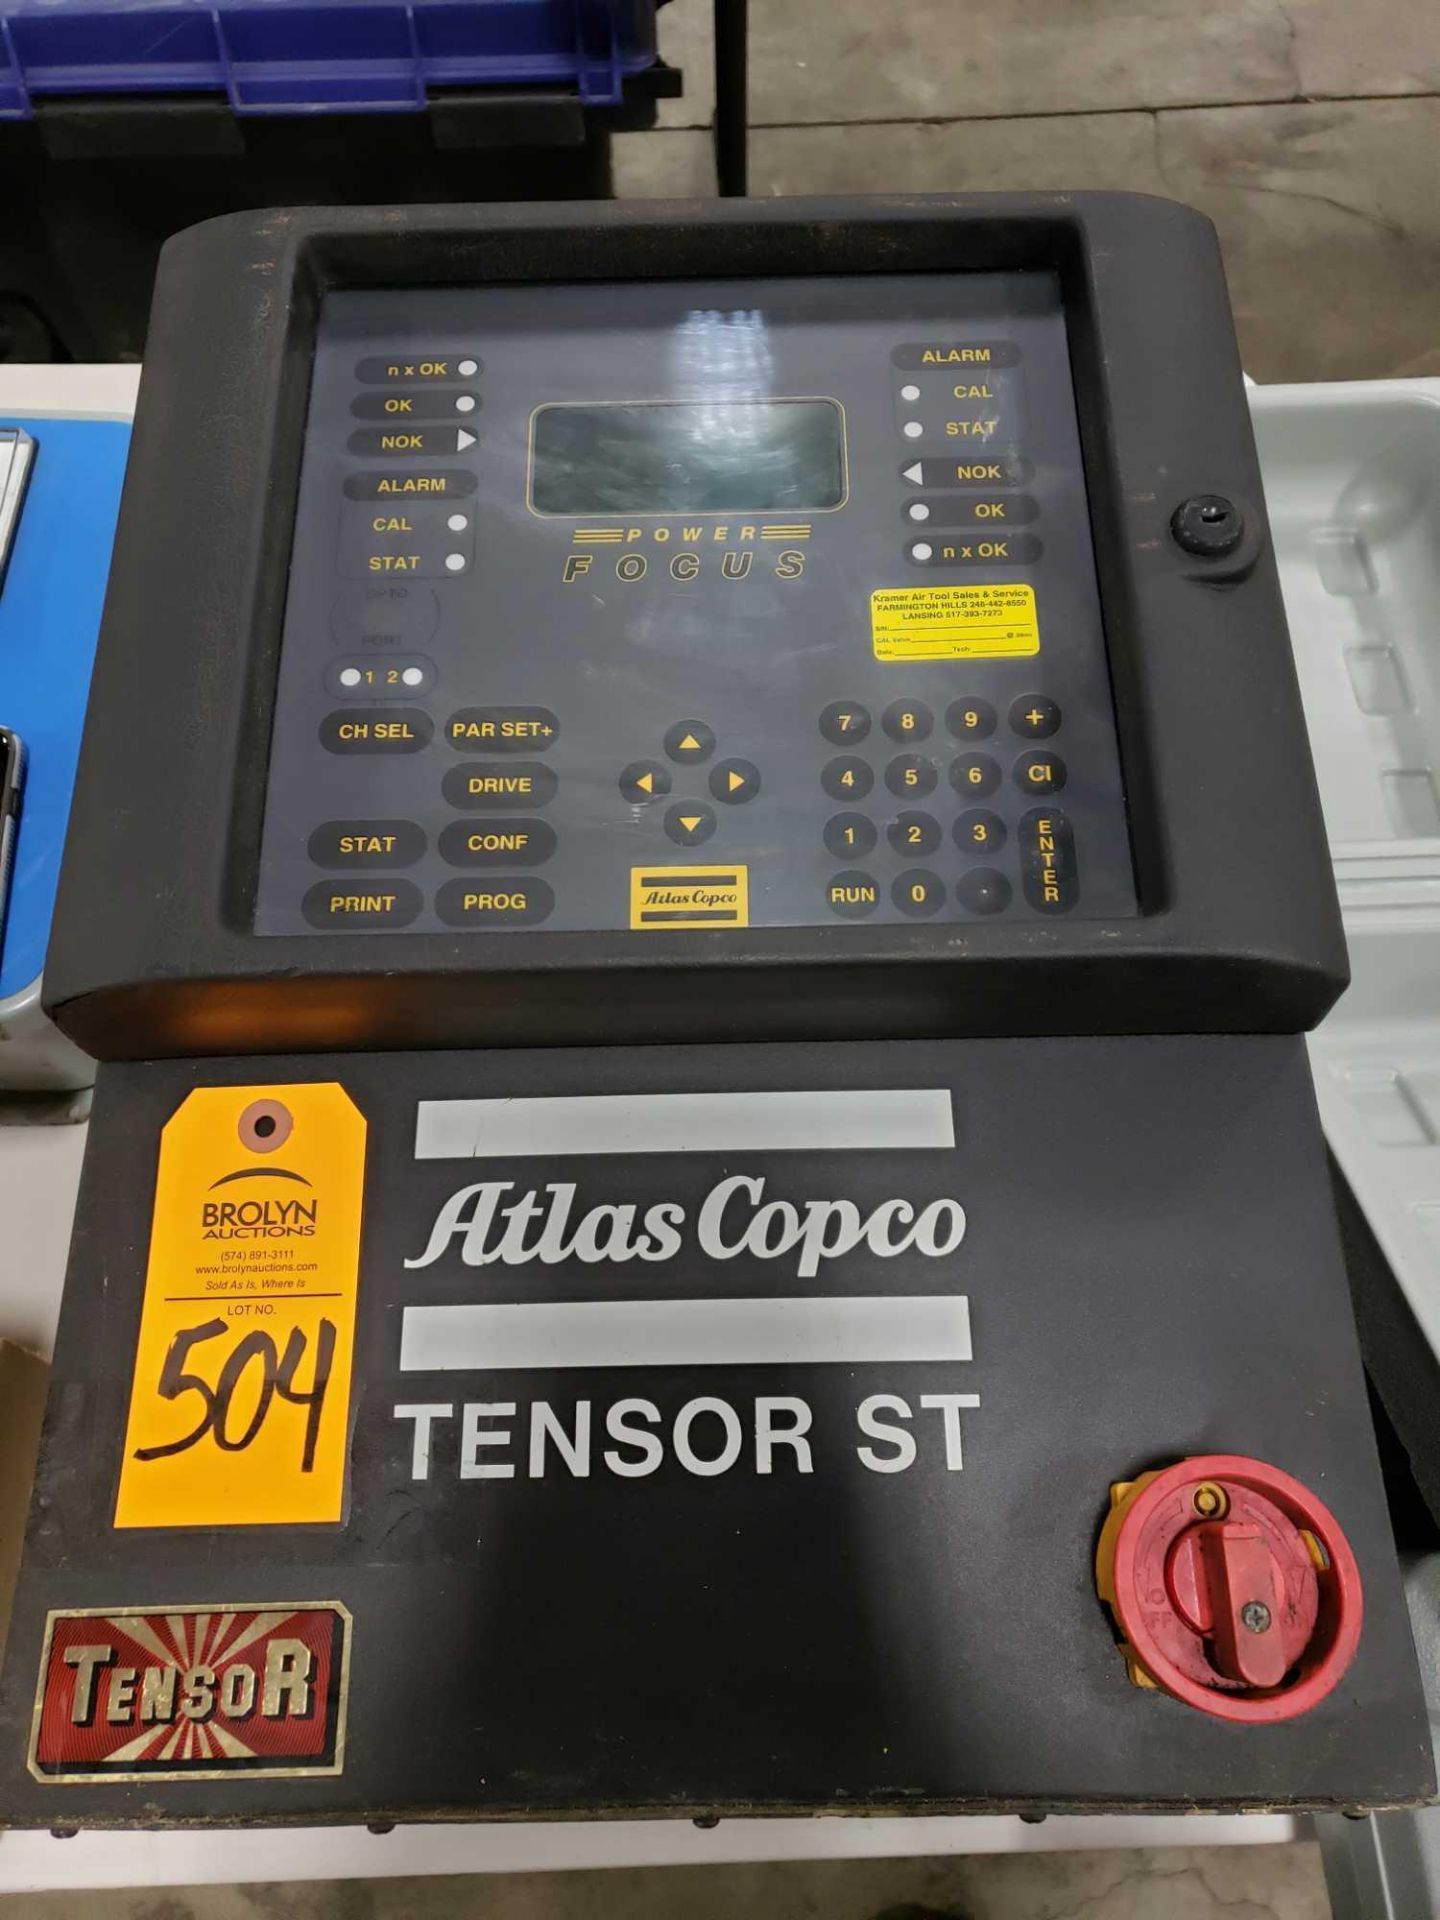 Atlas Copco Power Focus controller. Type 2102-59-115RST.